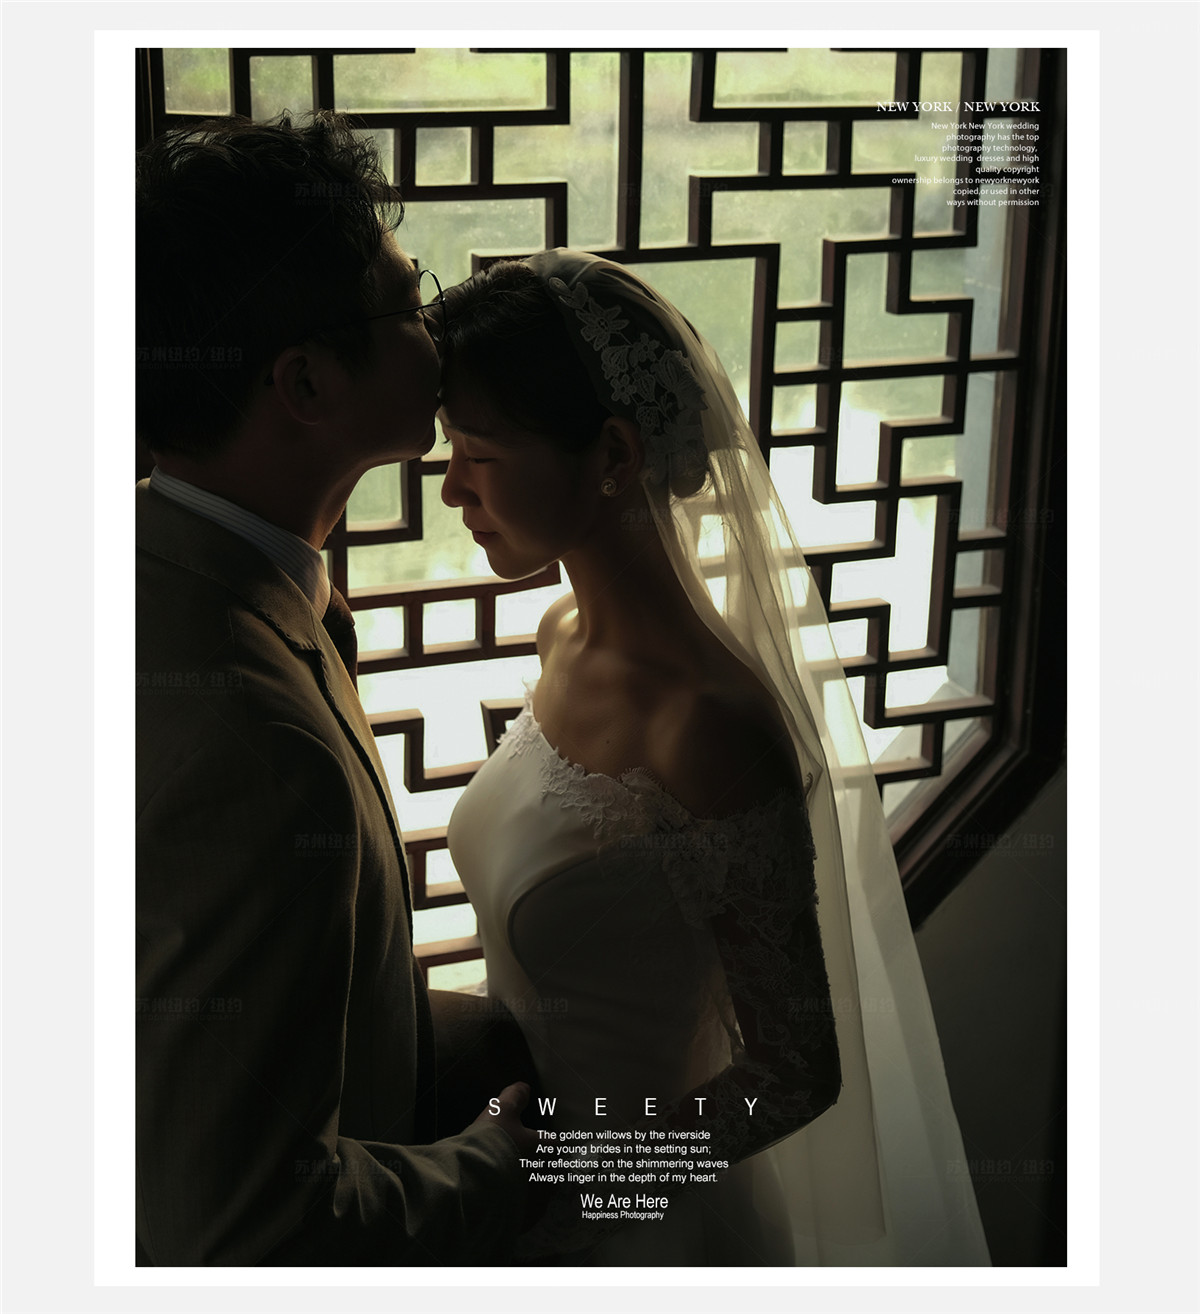 Mr.叶 & Ms.石（纽约纽约最新客照）婚纱摄影照